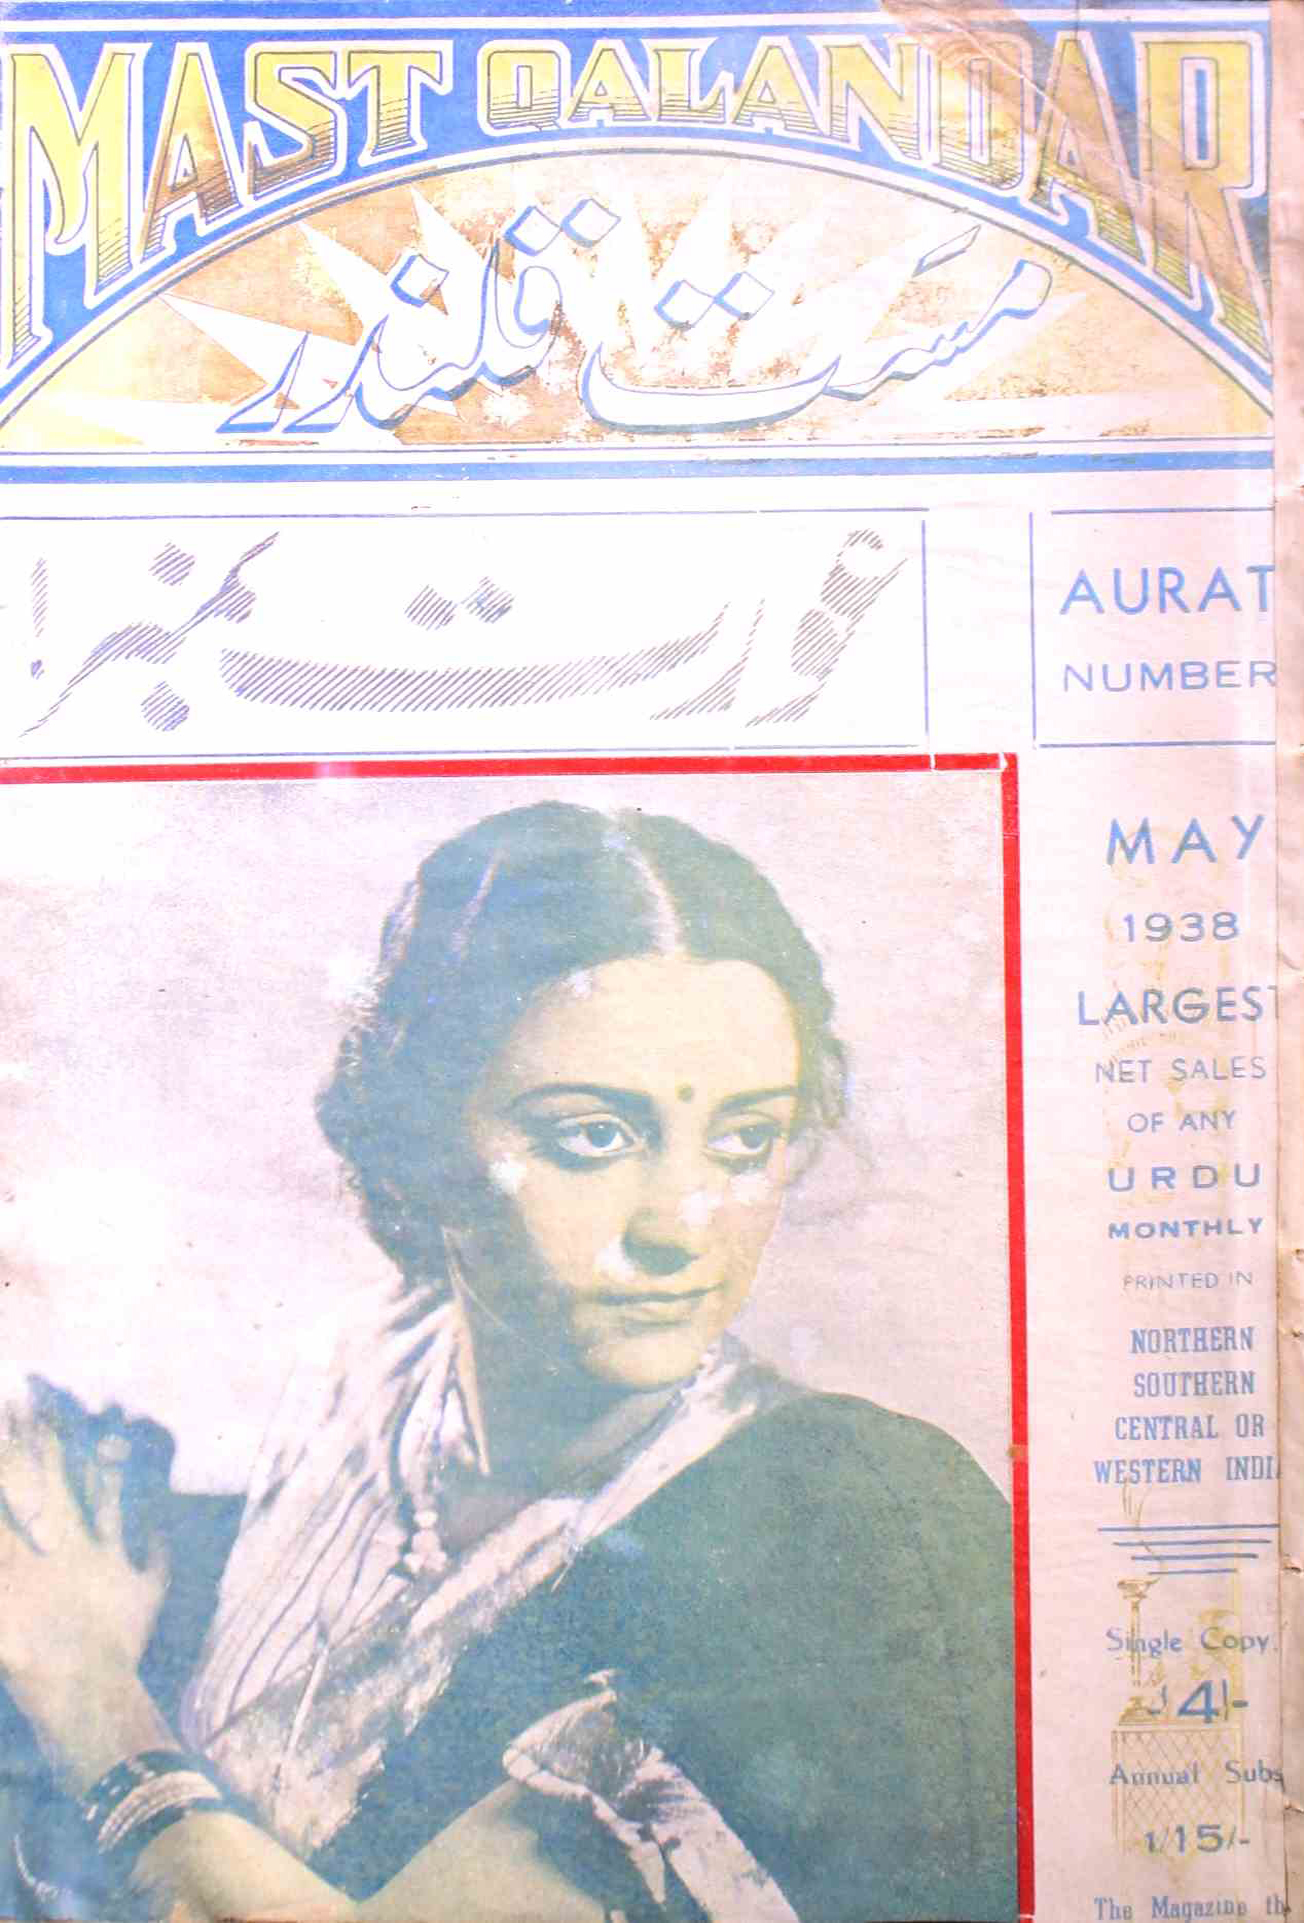 Mast Qalandar Jild 18 No 2 May 1938-SVK-Shumara Number-002